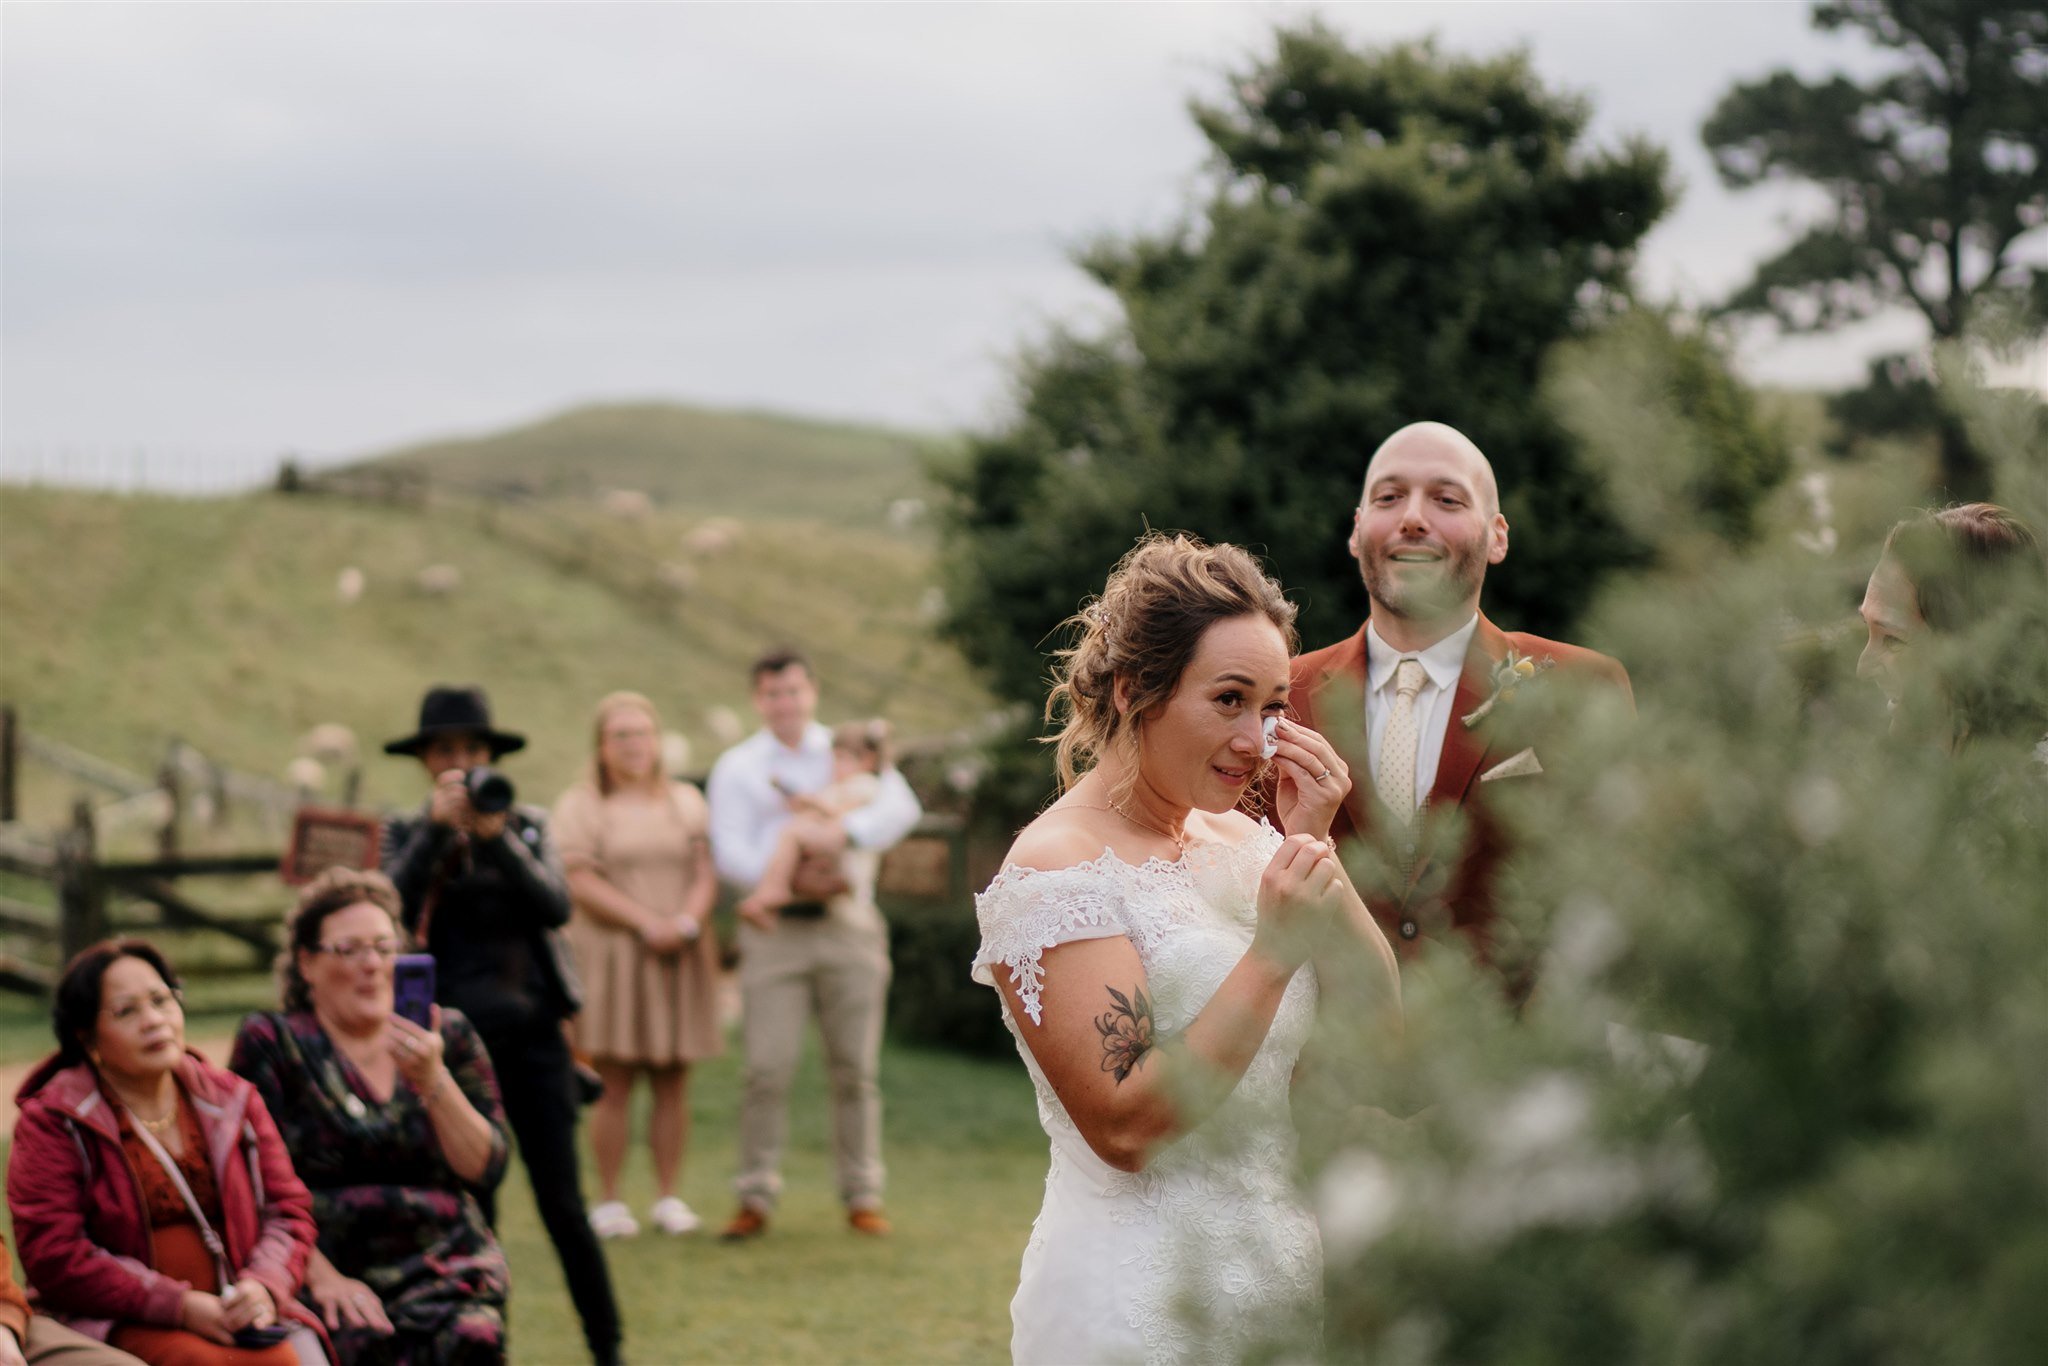 Matamata wedding venue | Hobbiton Tour | Auckland Wedding Videographer| Best Photographer| Top Videography | Wedding Ceremony Photography | The Green Dragon Inn | Dear White Productions